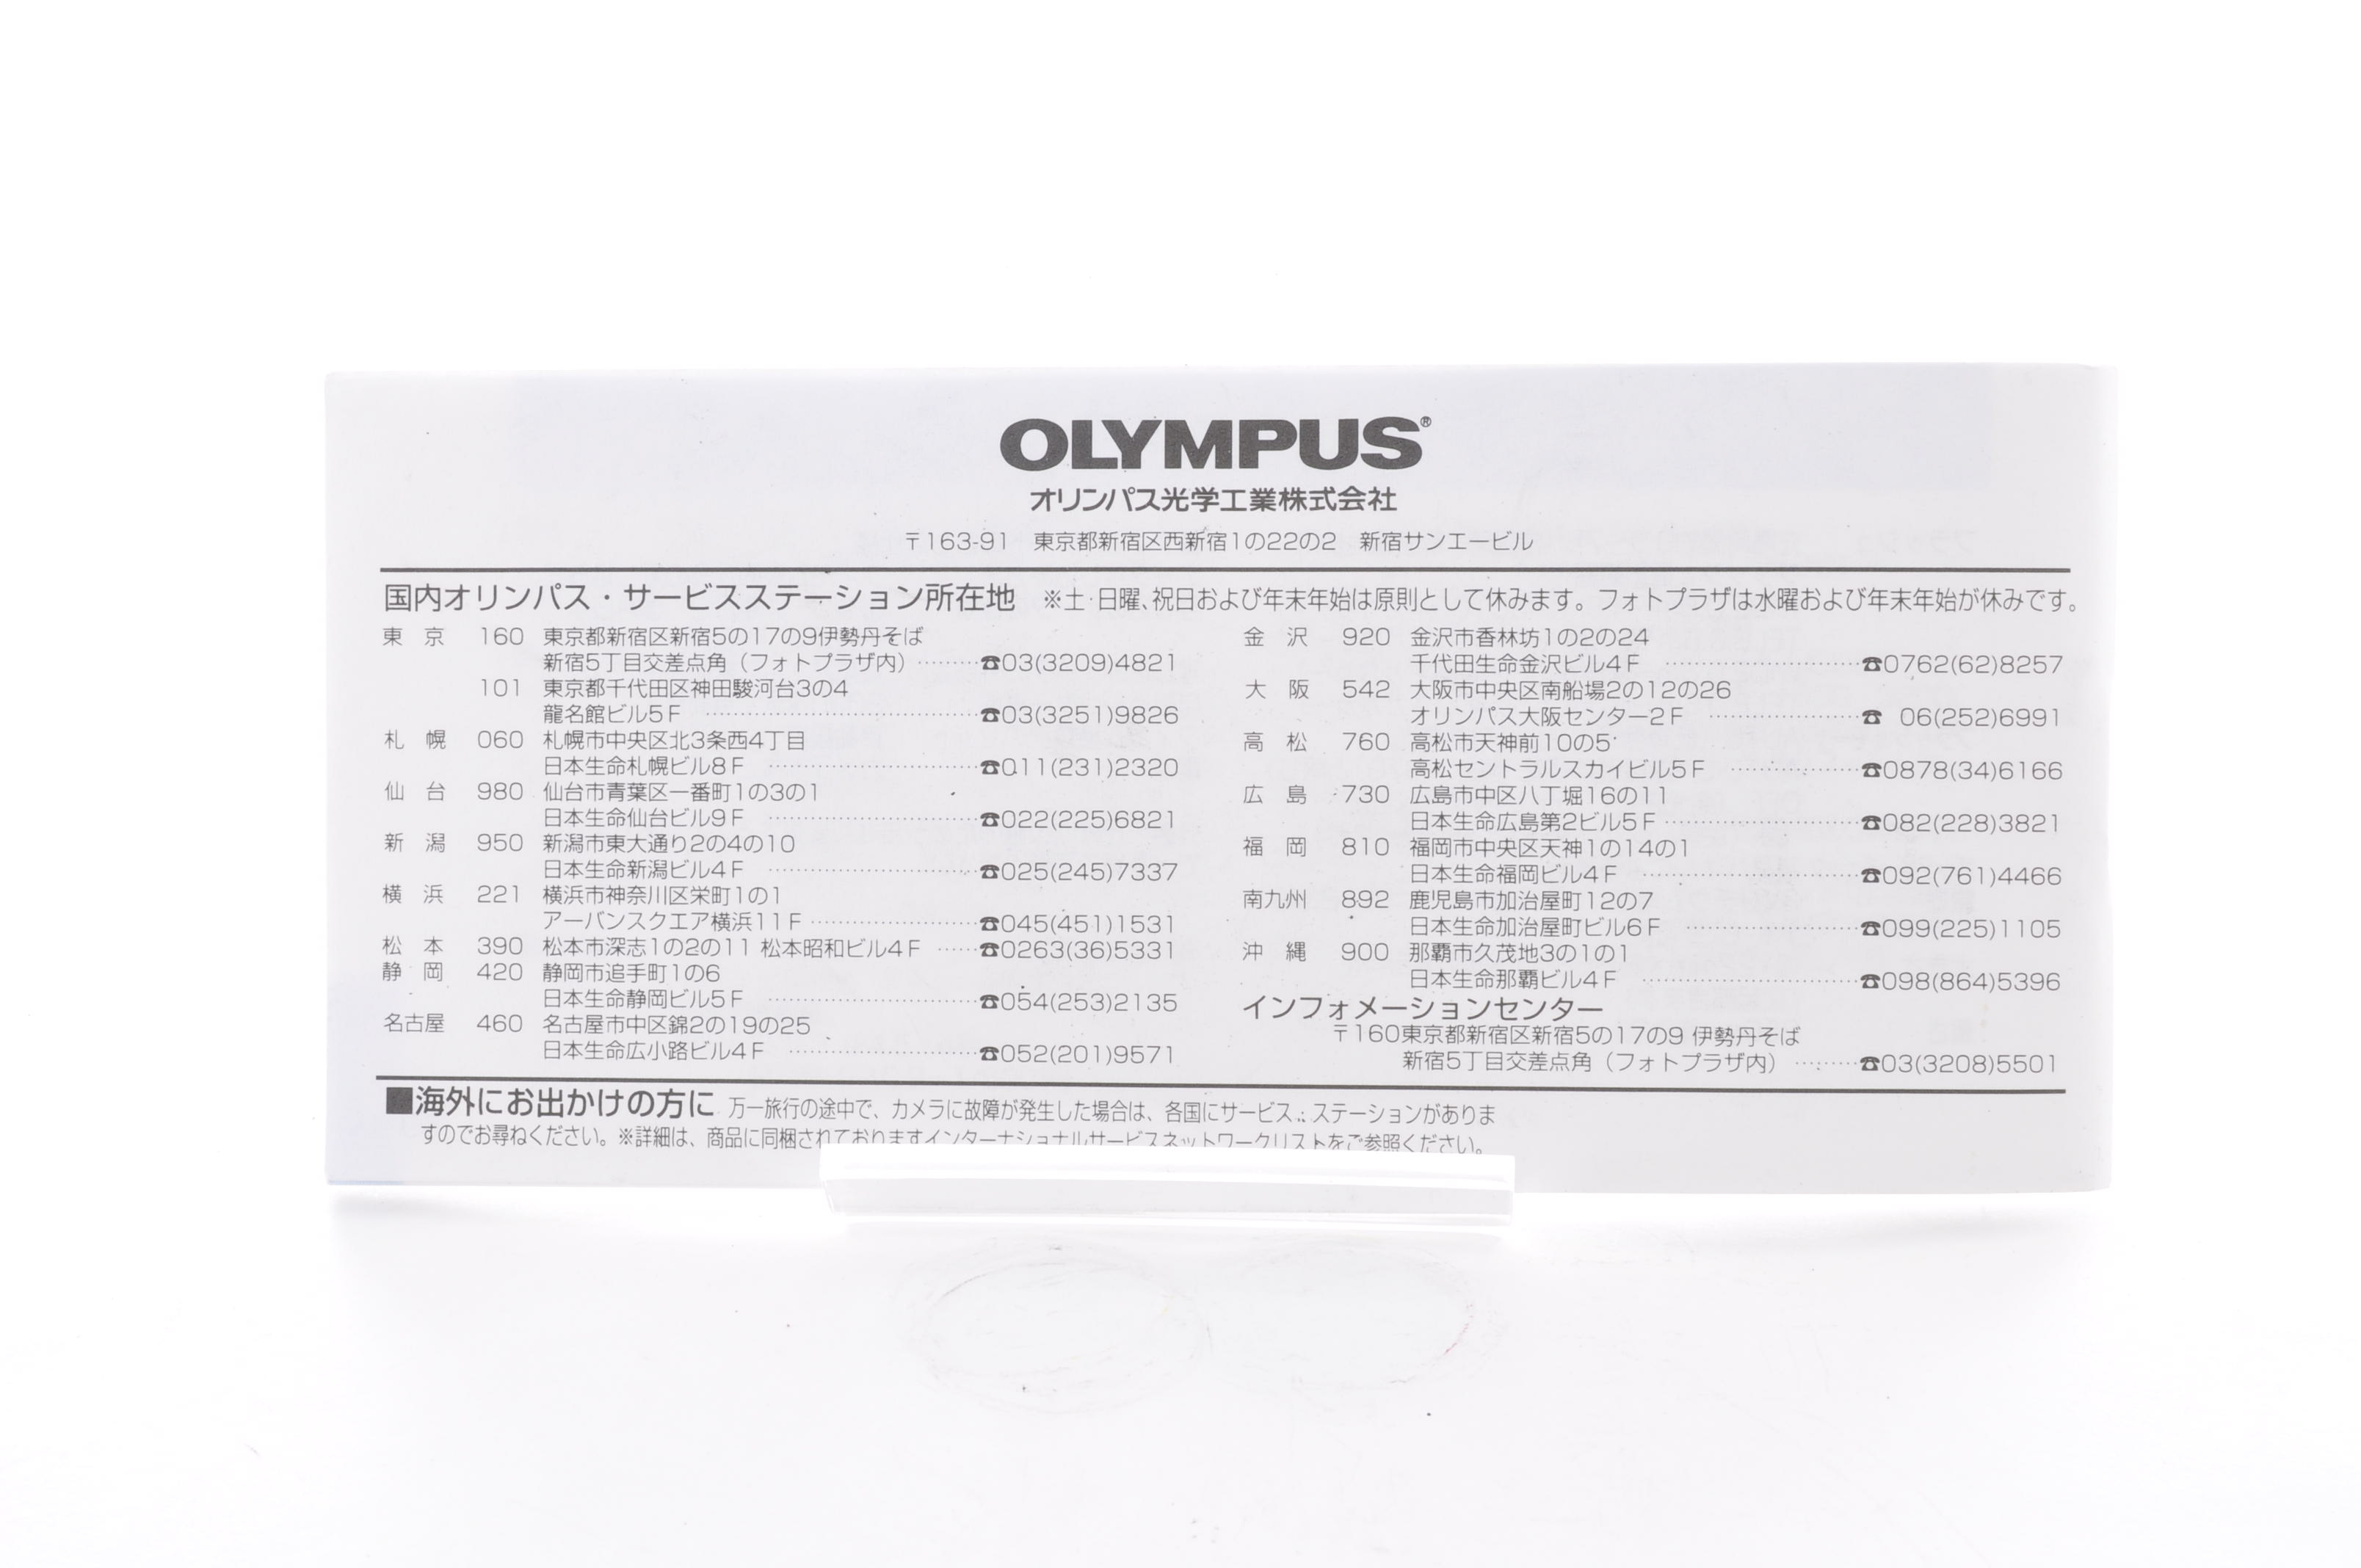 Olympus Infinity Accura Zoom 105 Point&Shoot 35mm Film Camera [Near Mint] Japan img18